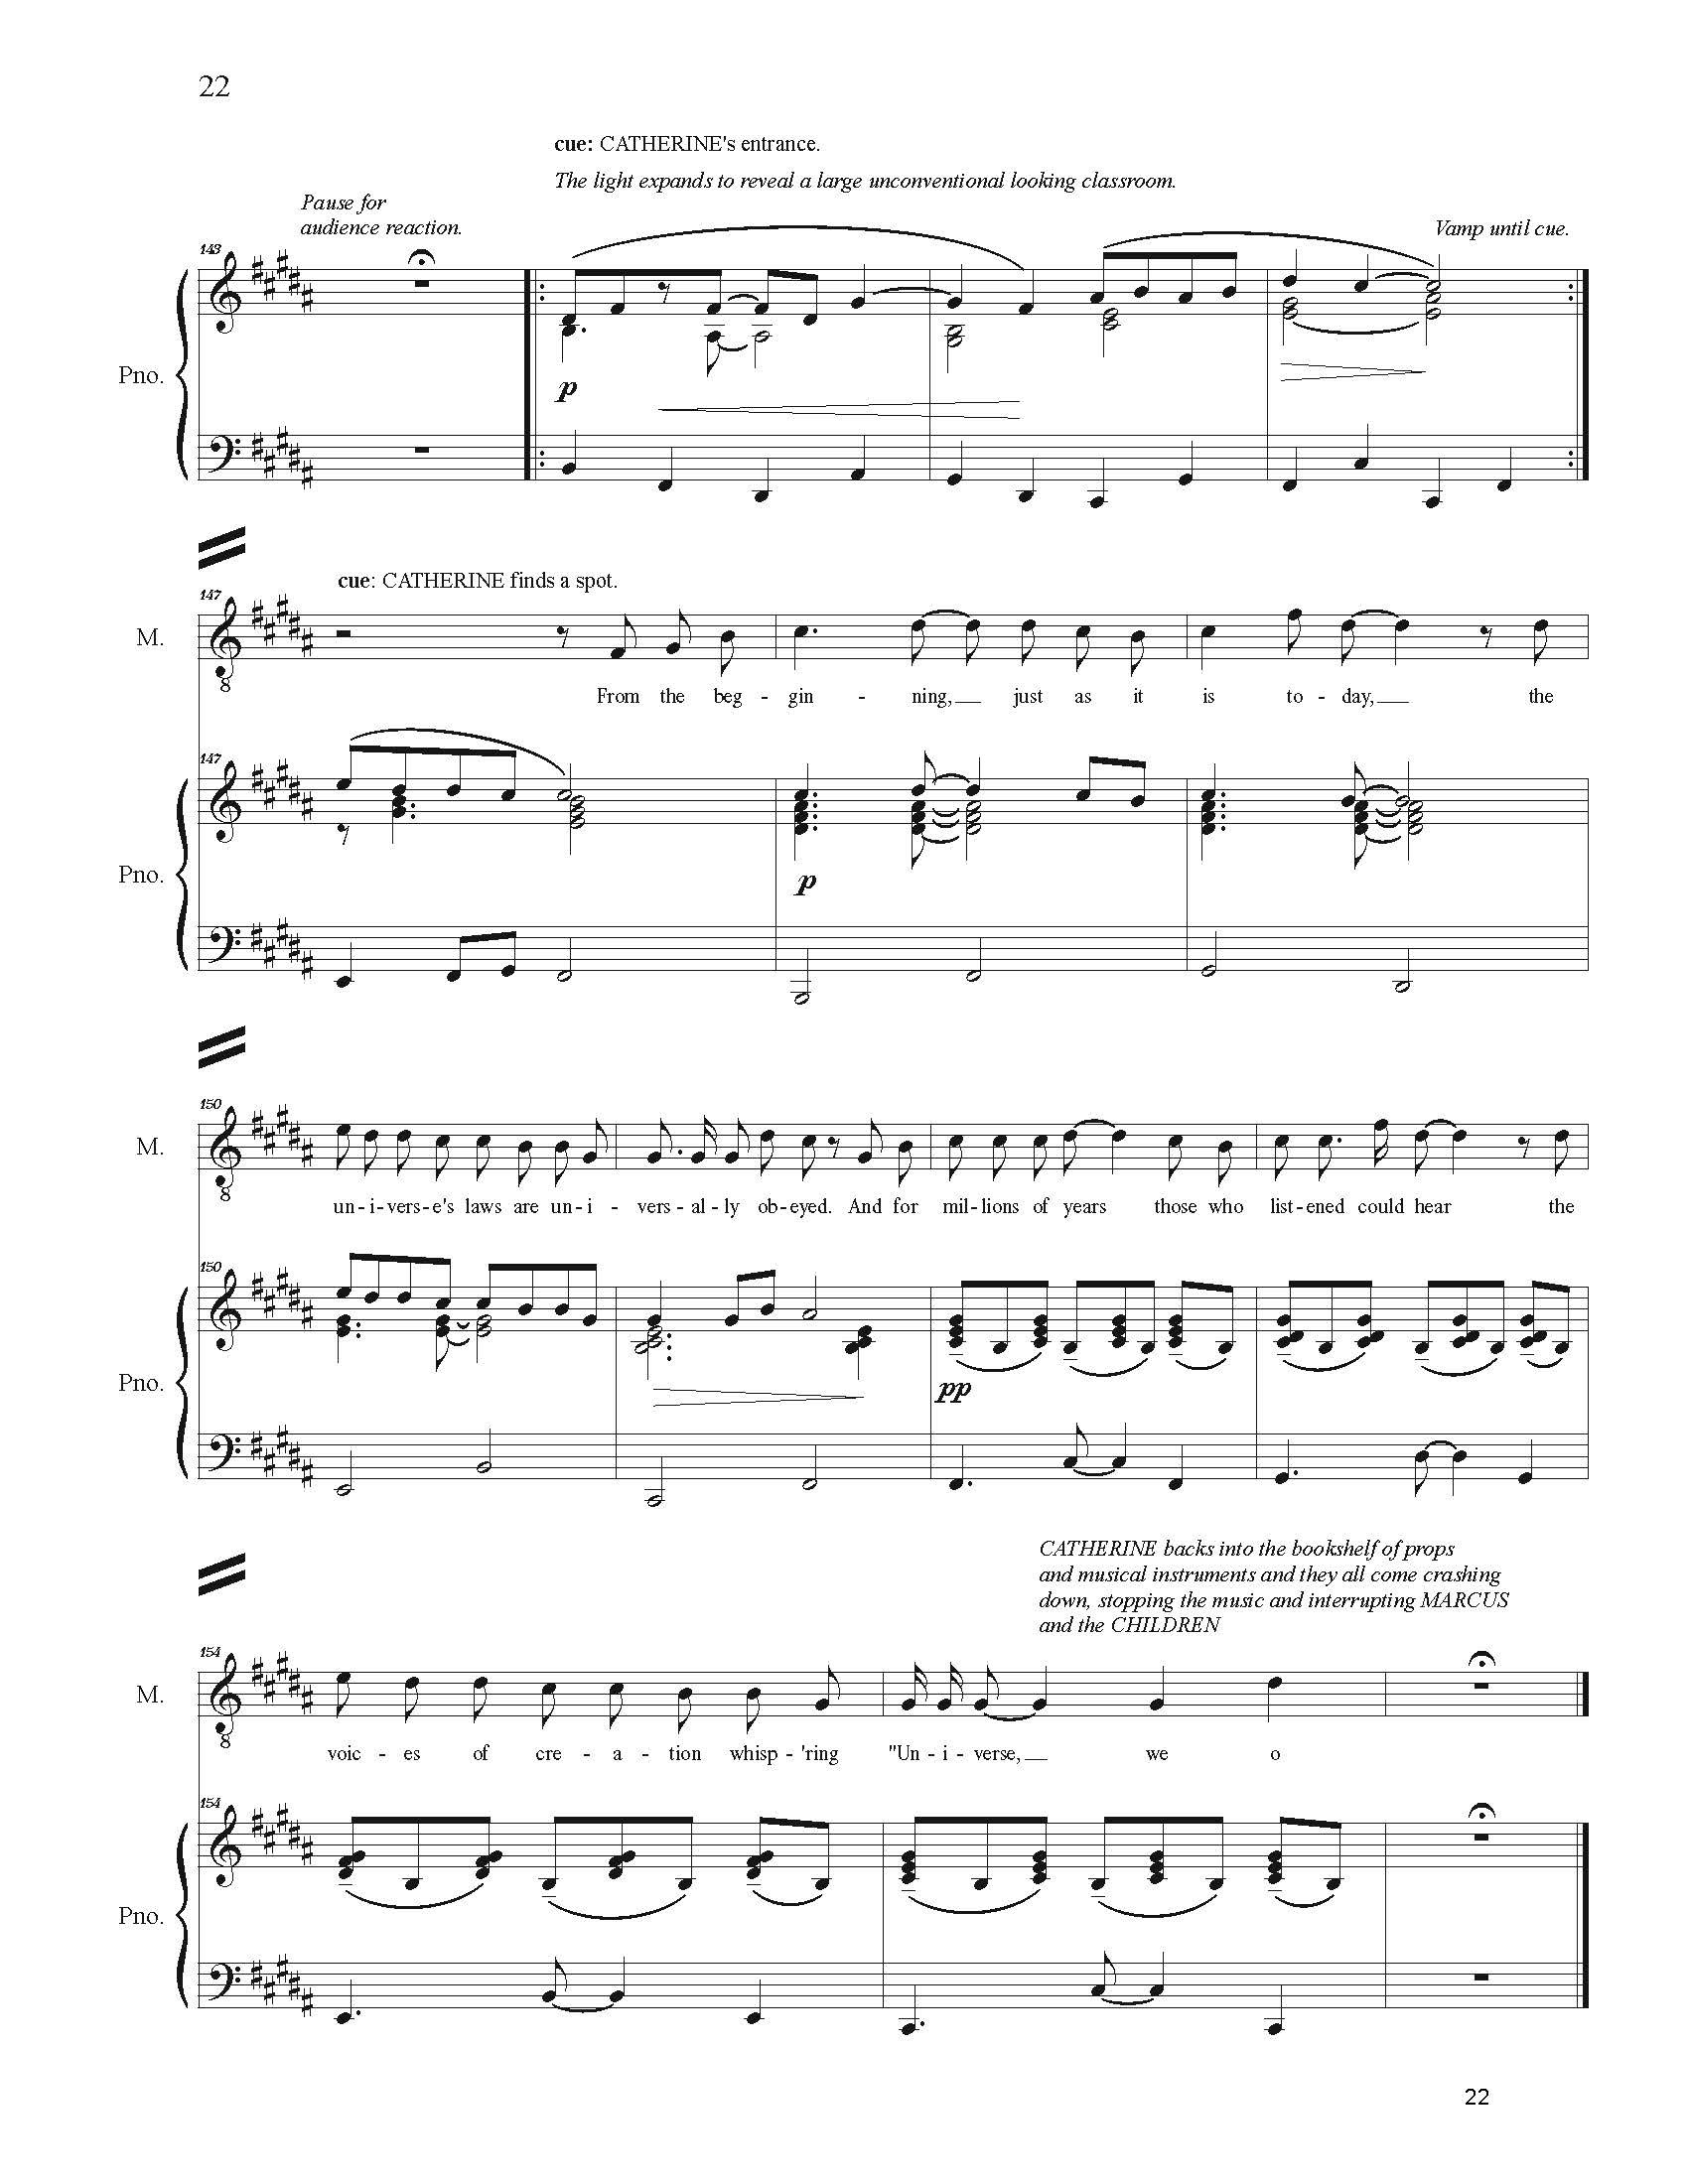 FULL PIANO VOCAL SCORE DRAFT 1 - Score_Page_022.jpg